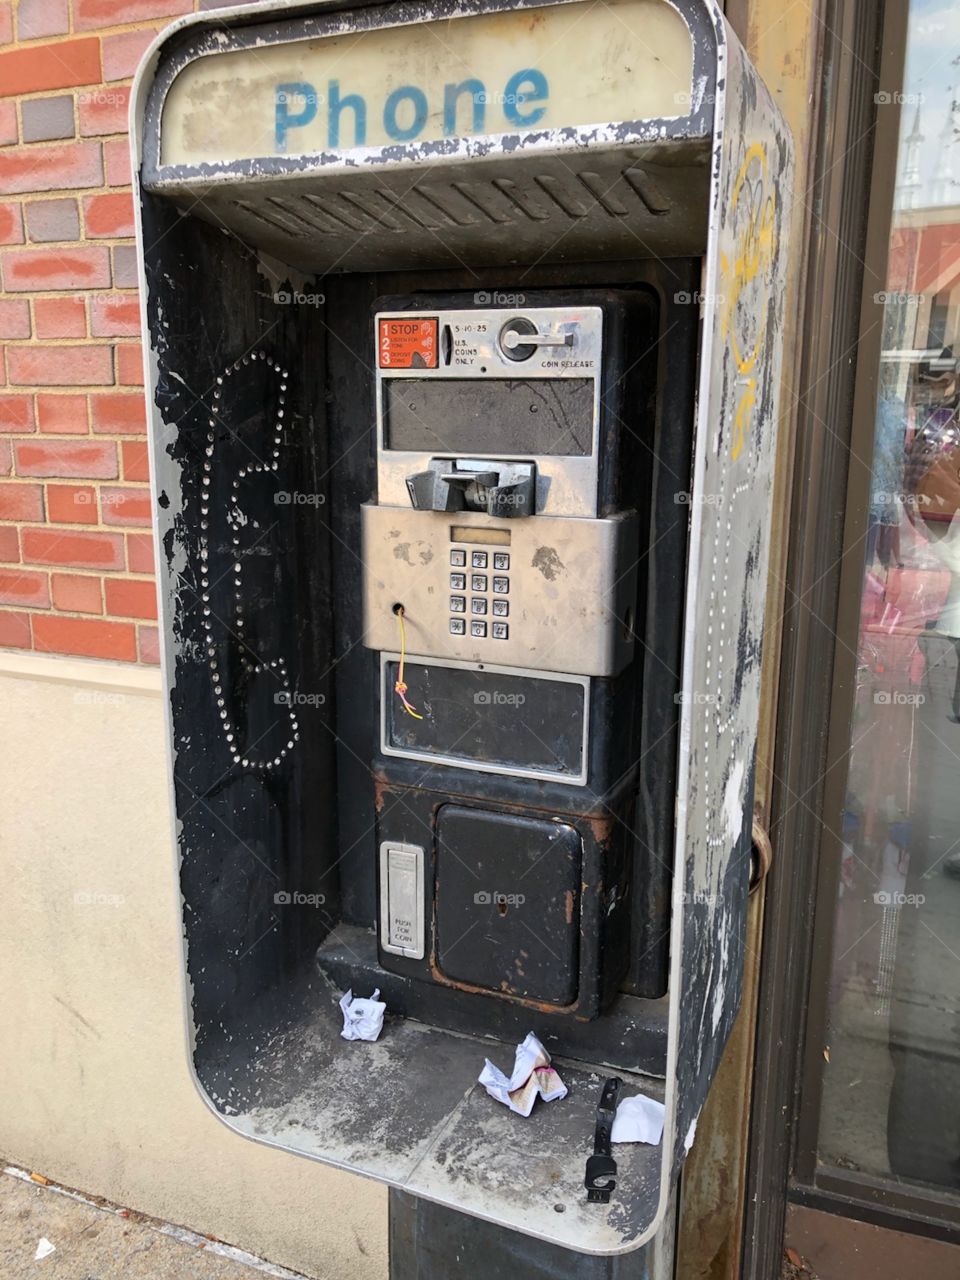 forgotten technology
Payphone Obsolete